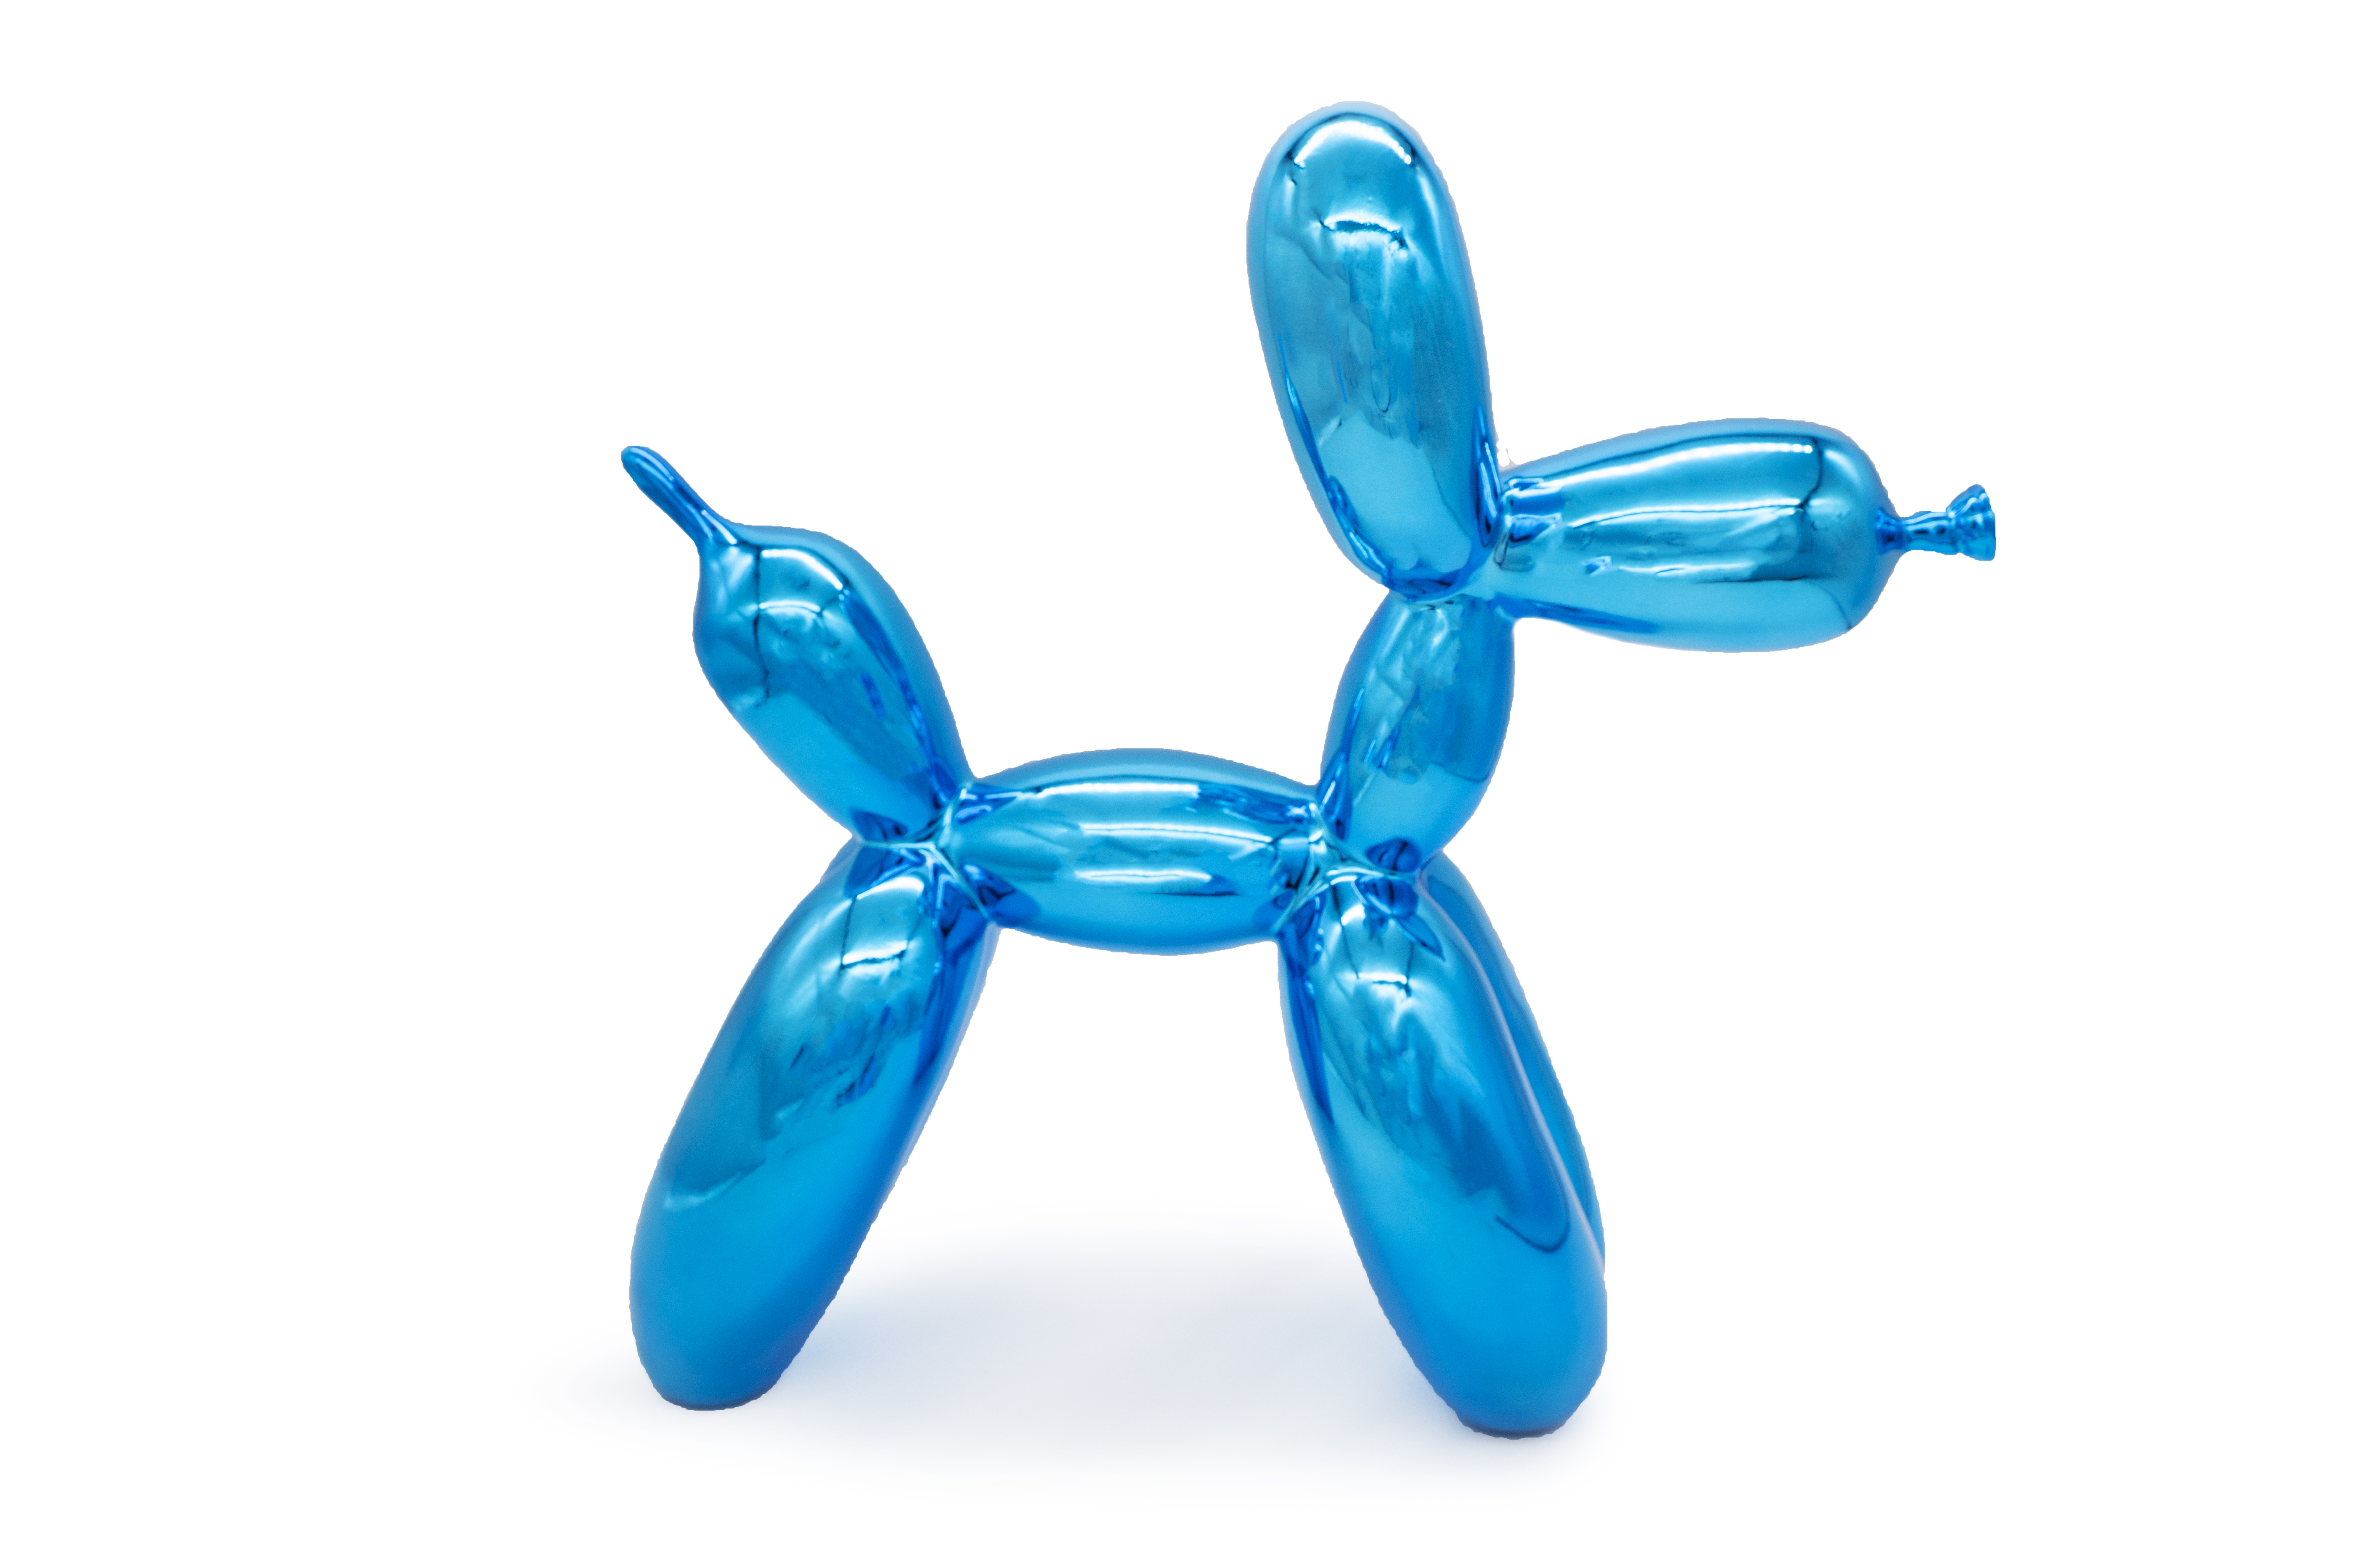 Editions Studio after Jeff Koons - Blue Balloon Dog - Sculpture